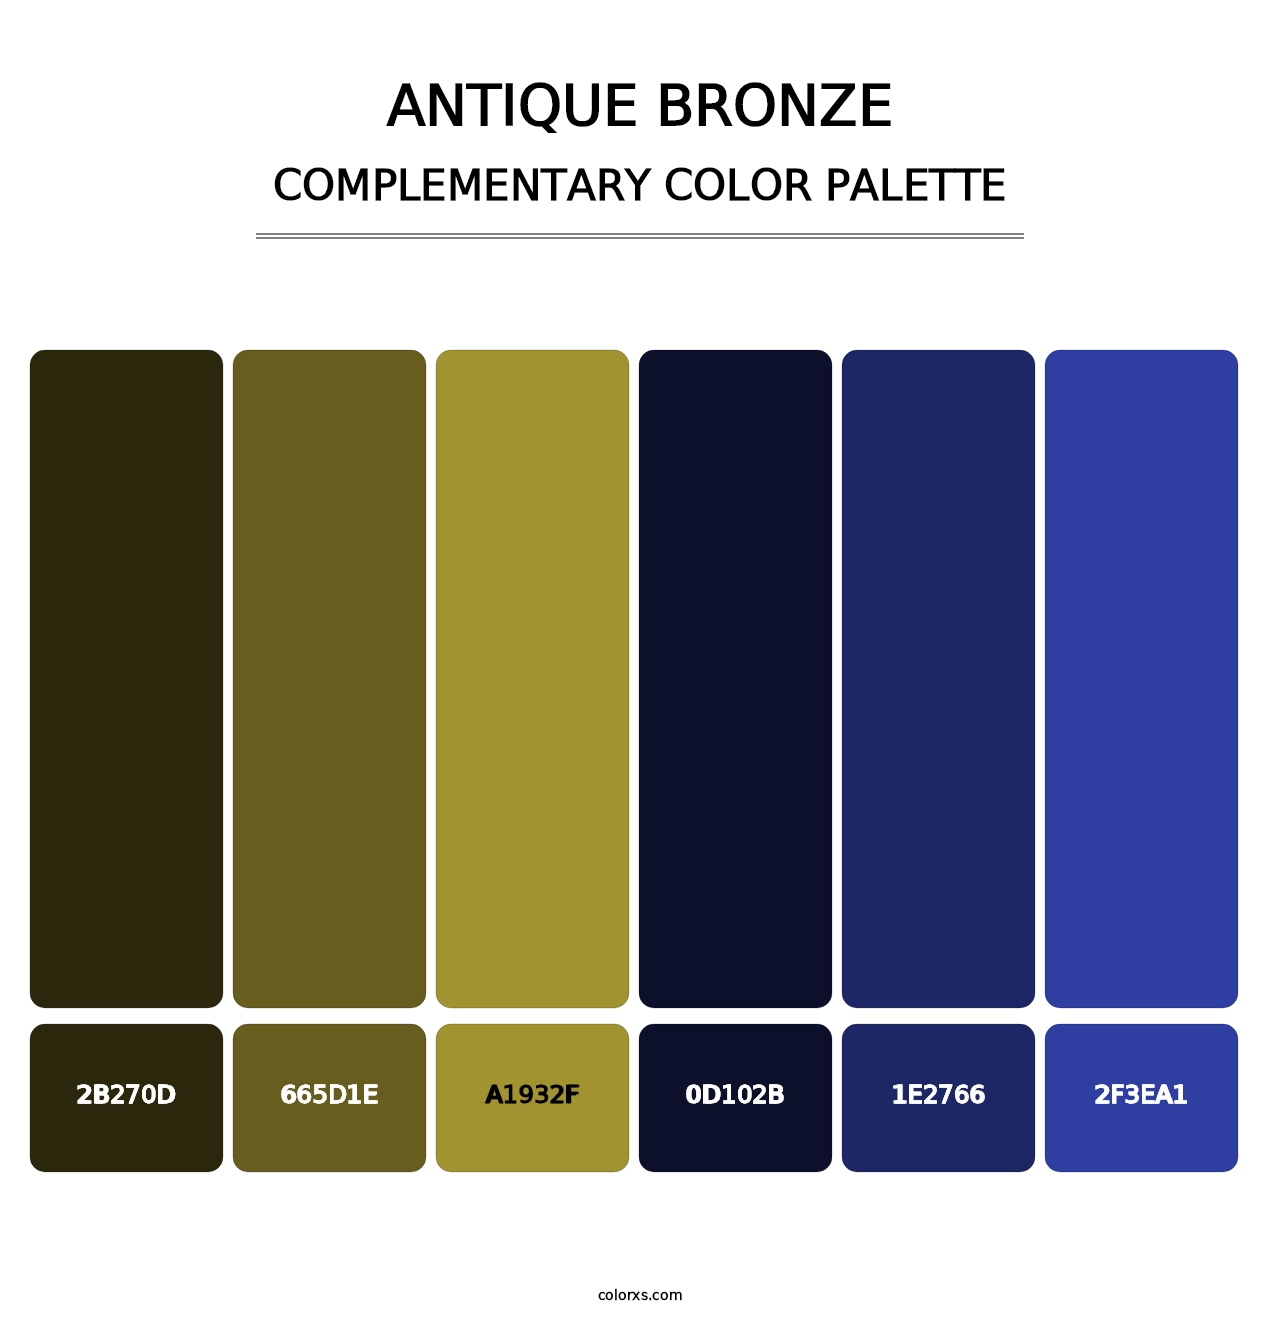 Antique Bronze - Complementary Color Palette